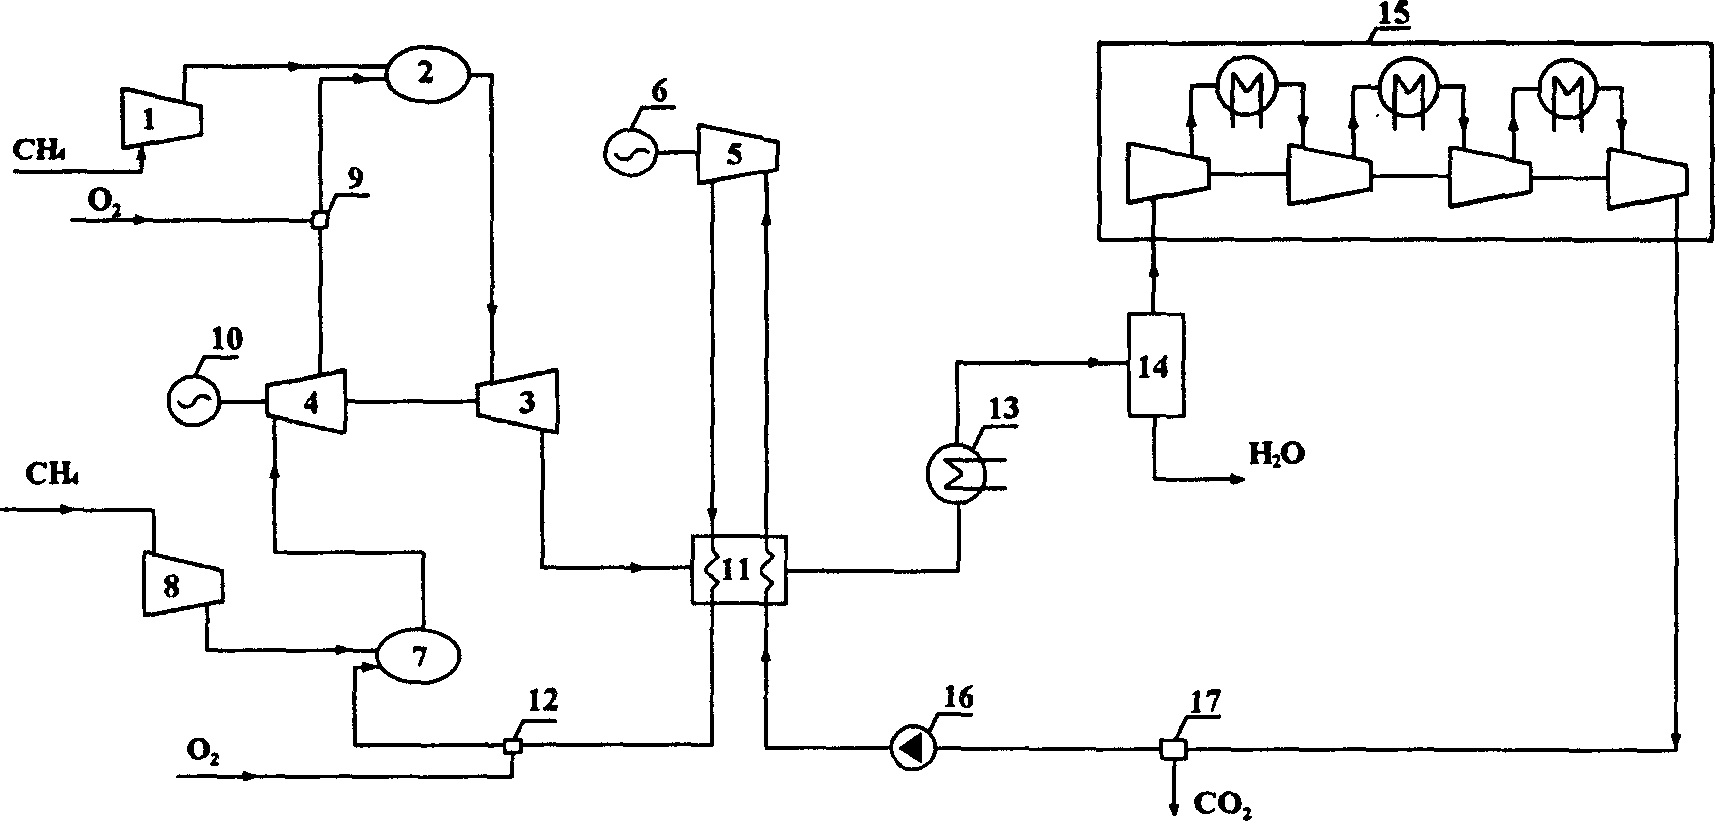 Gas power circulation system and circulation method